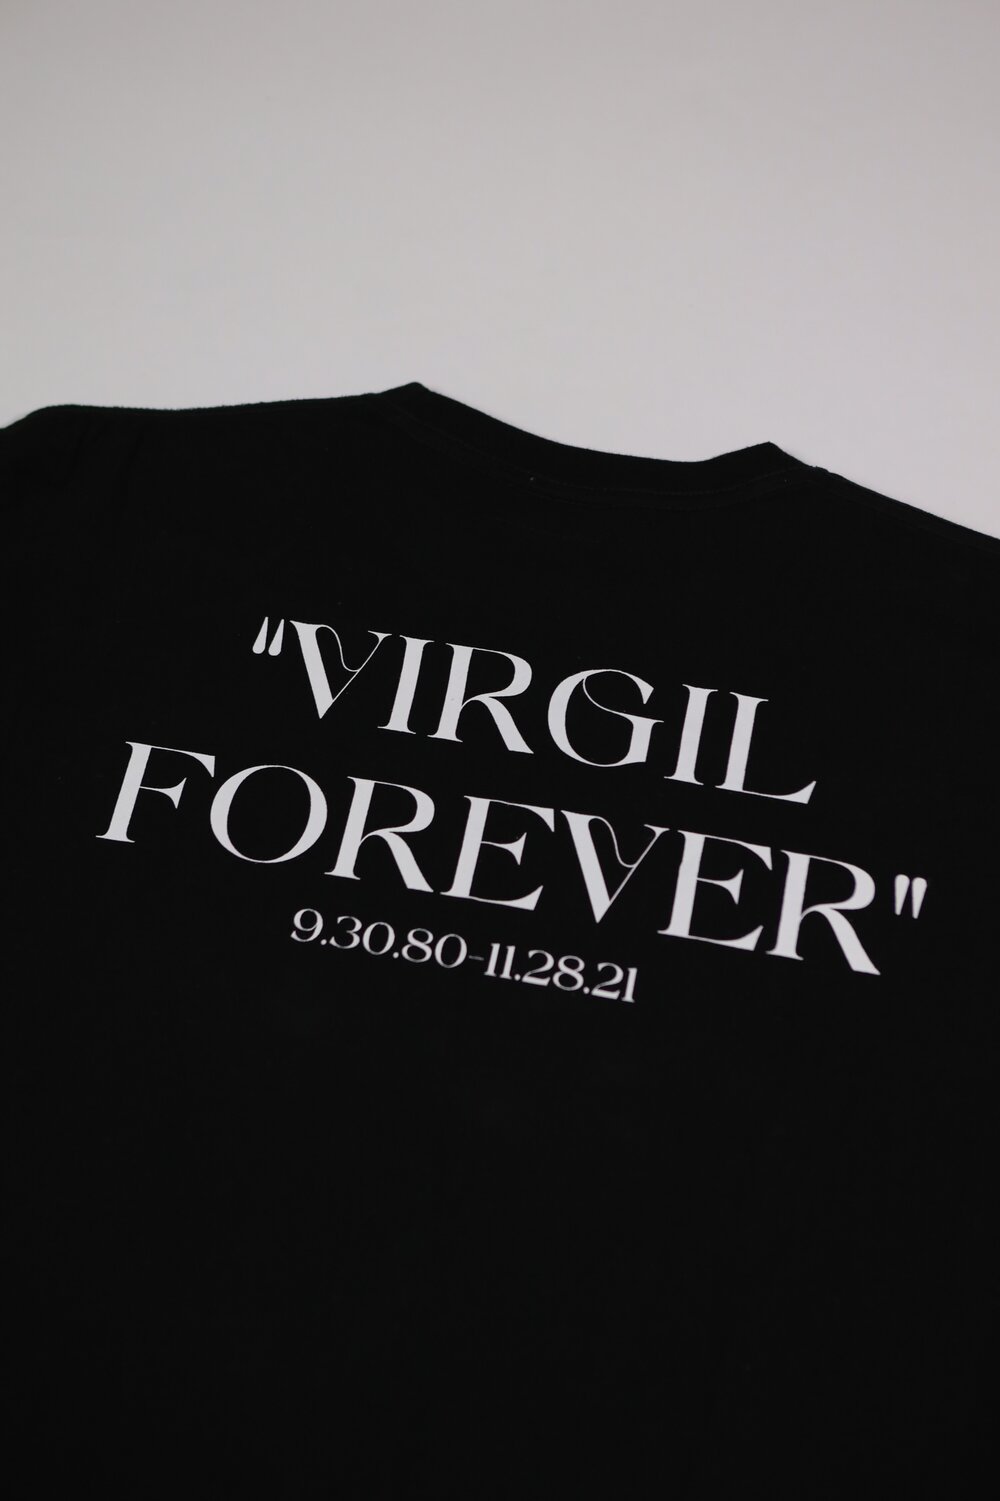 The — BHM Dream Forever Real SLEEP Virgil NVR is Tee DRMRS